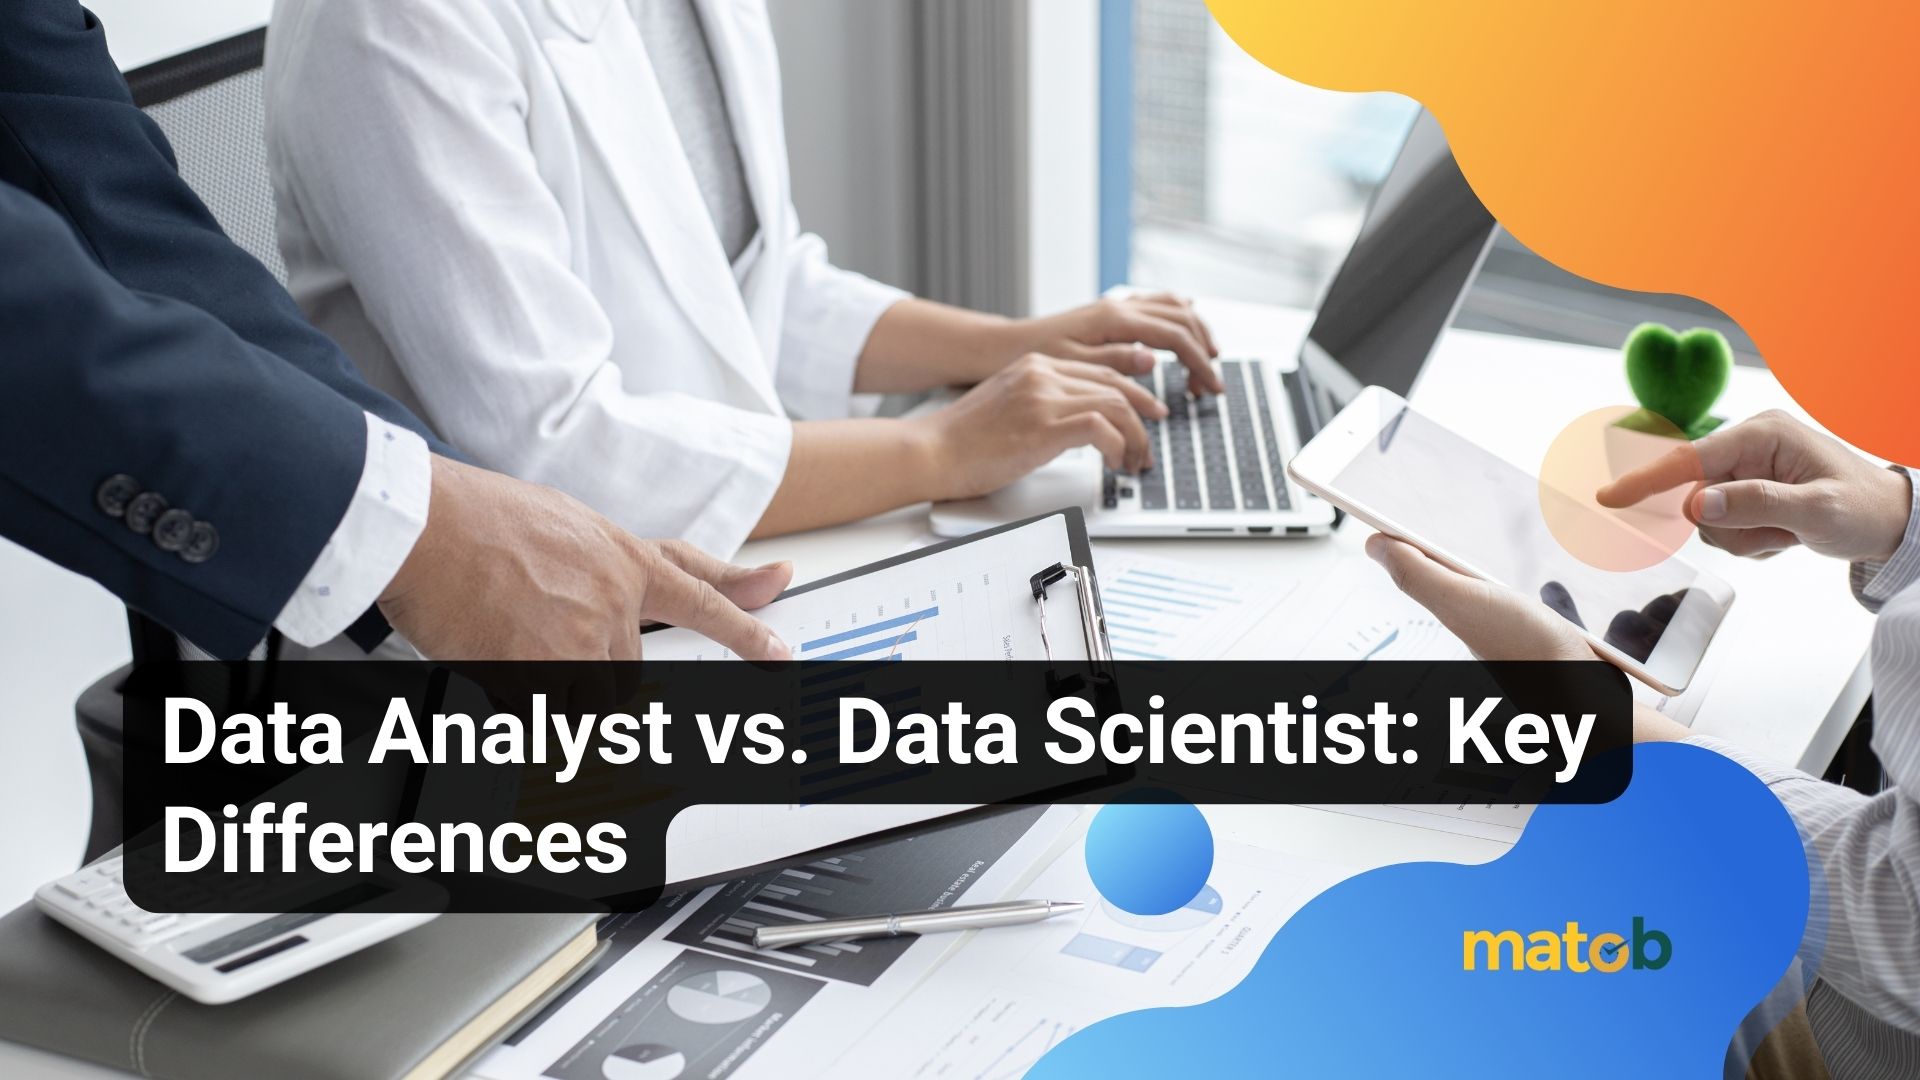 Data Analyst vs. Data Scientist: Key Differences